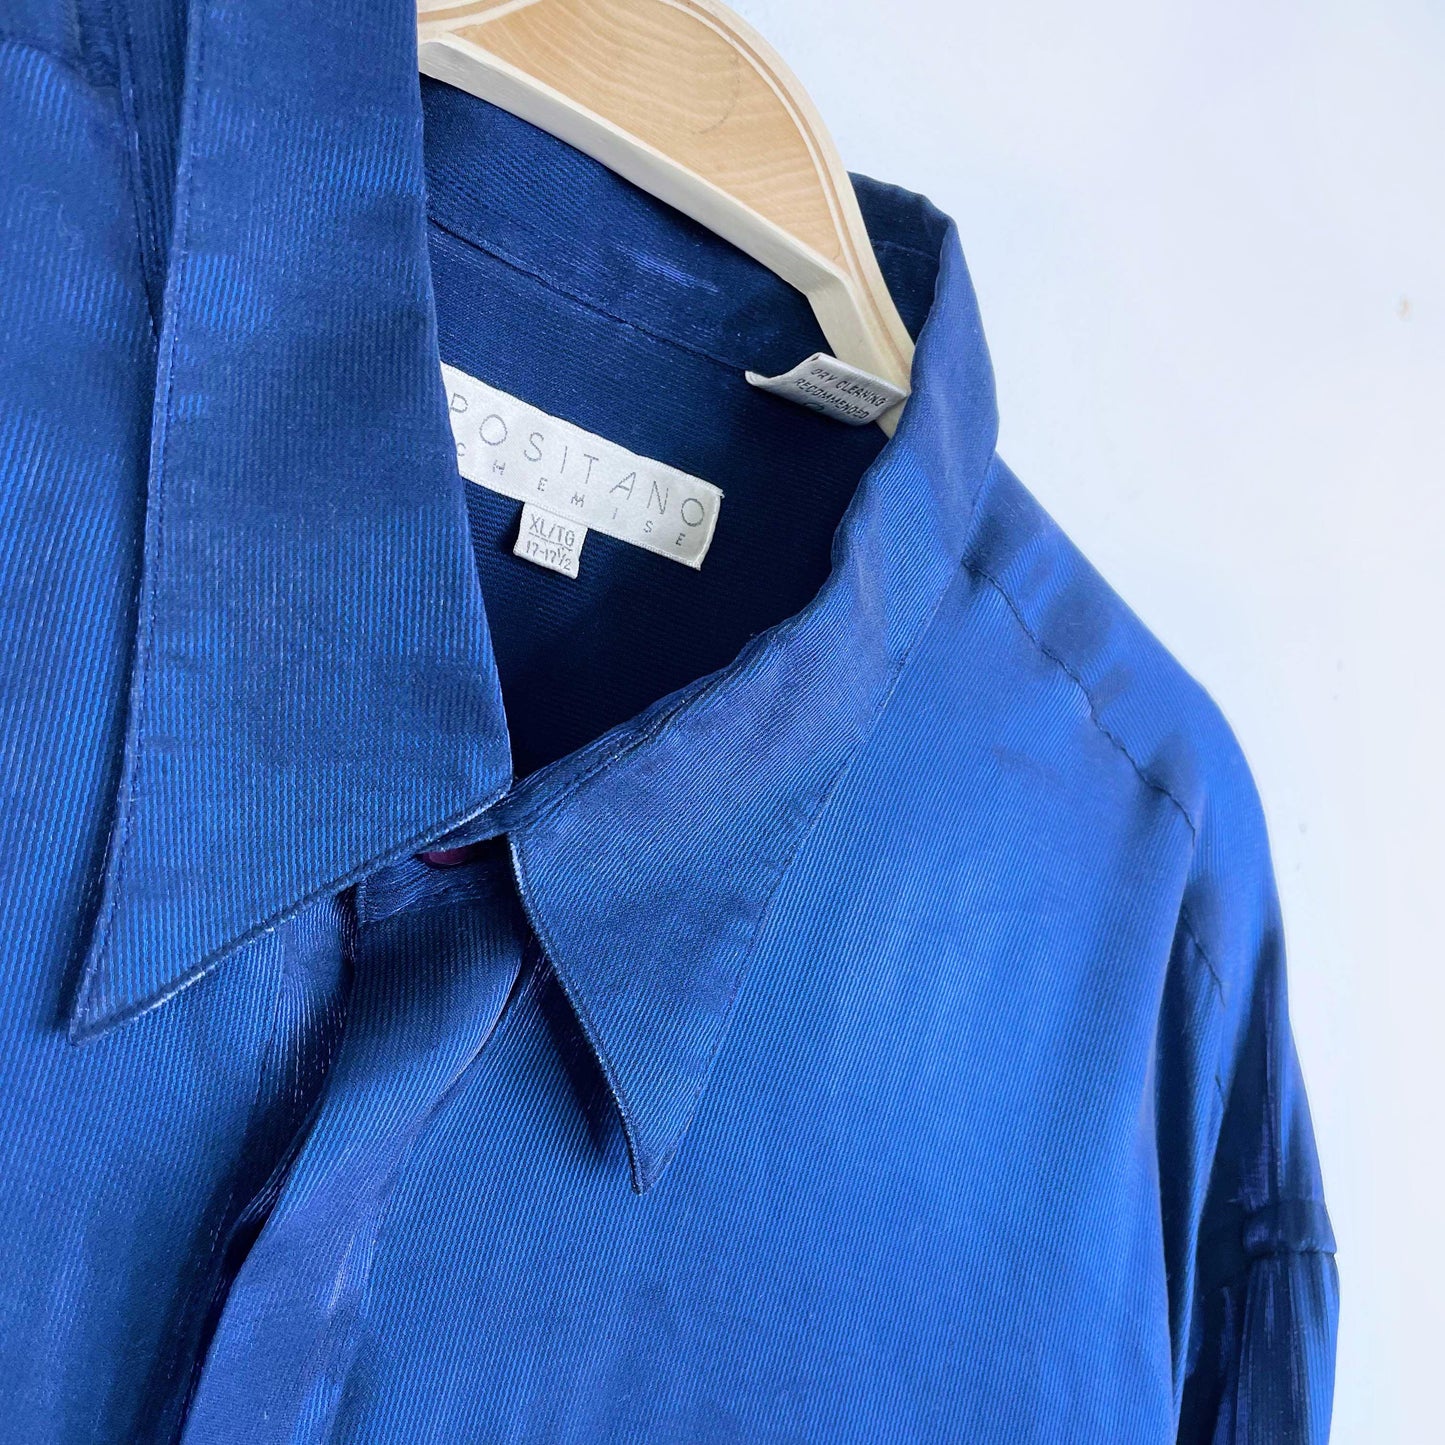 vintage positano chemise blue metallic shirt